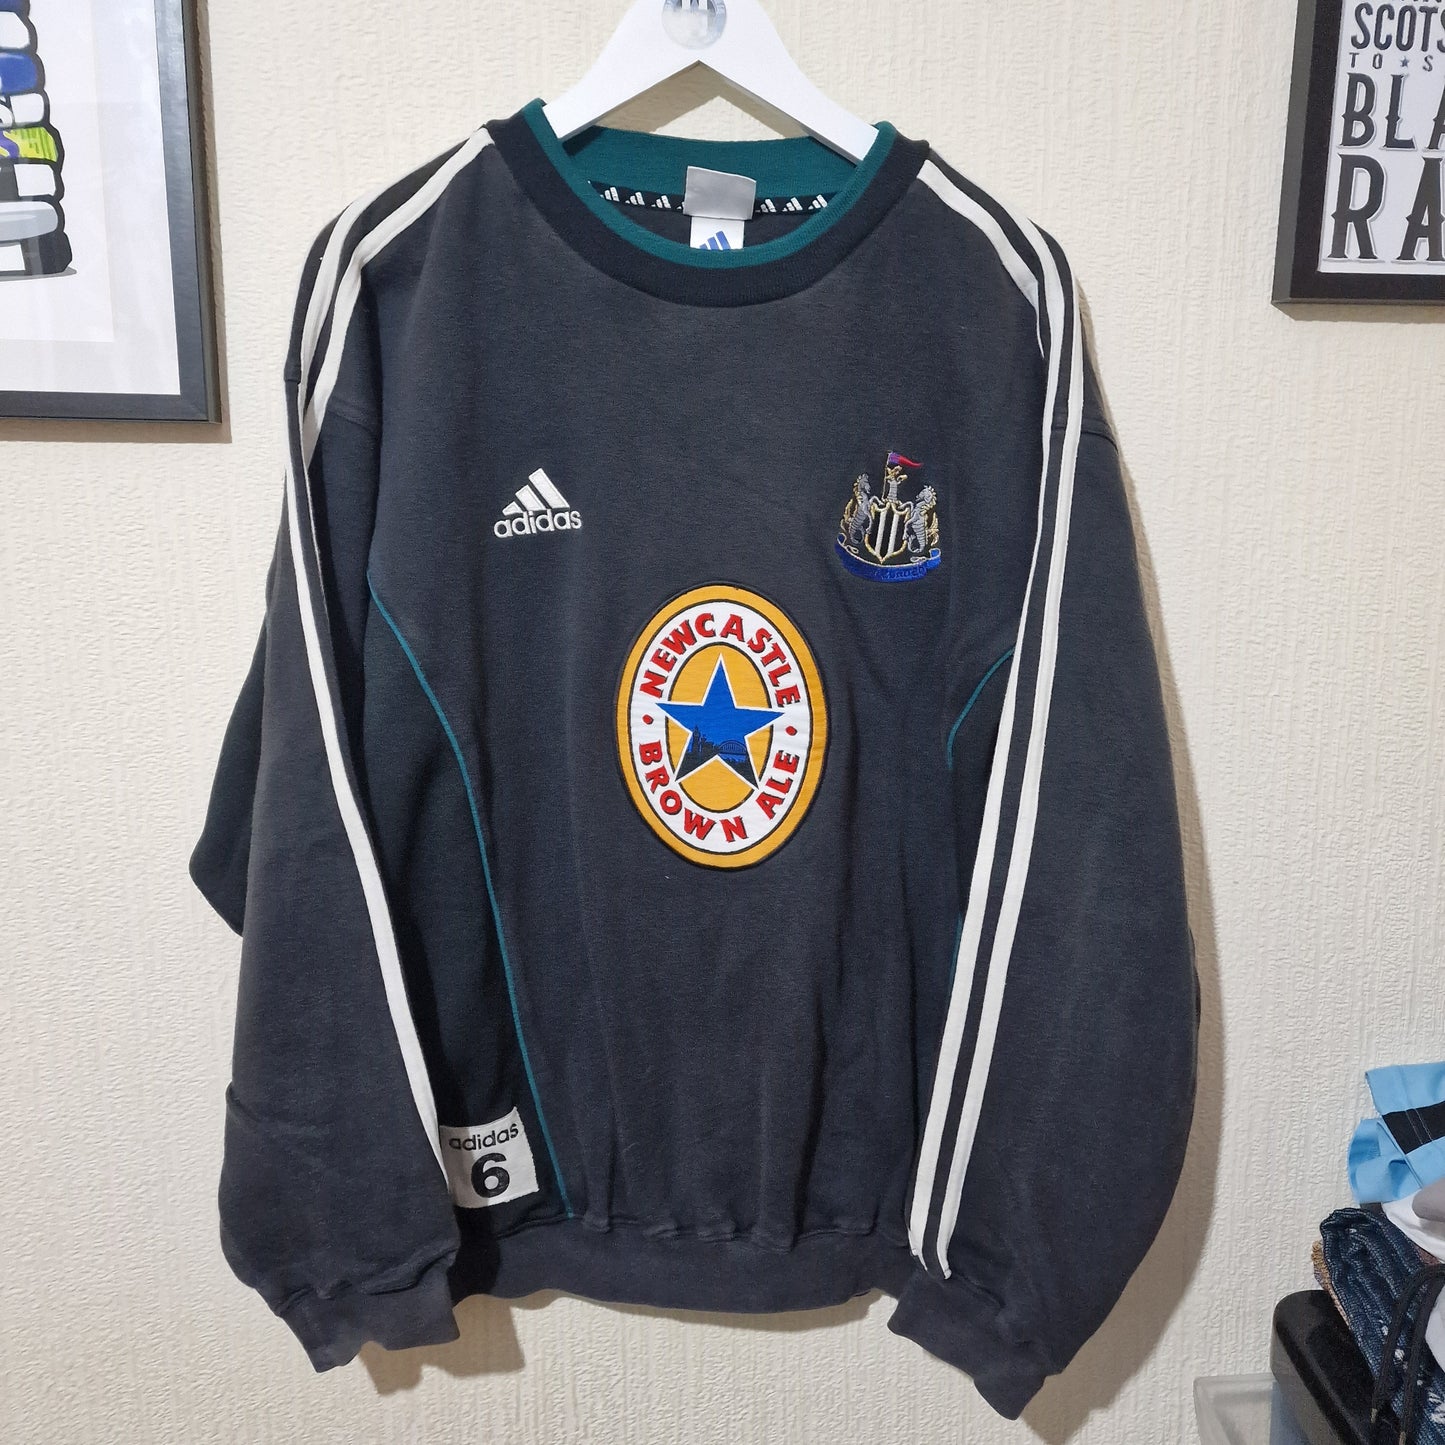 Newcastle United player worn 1999/00 sweatshirt - XL